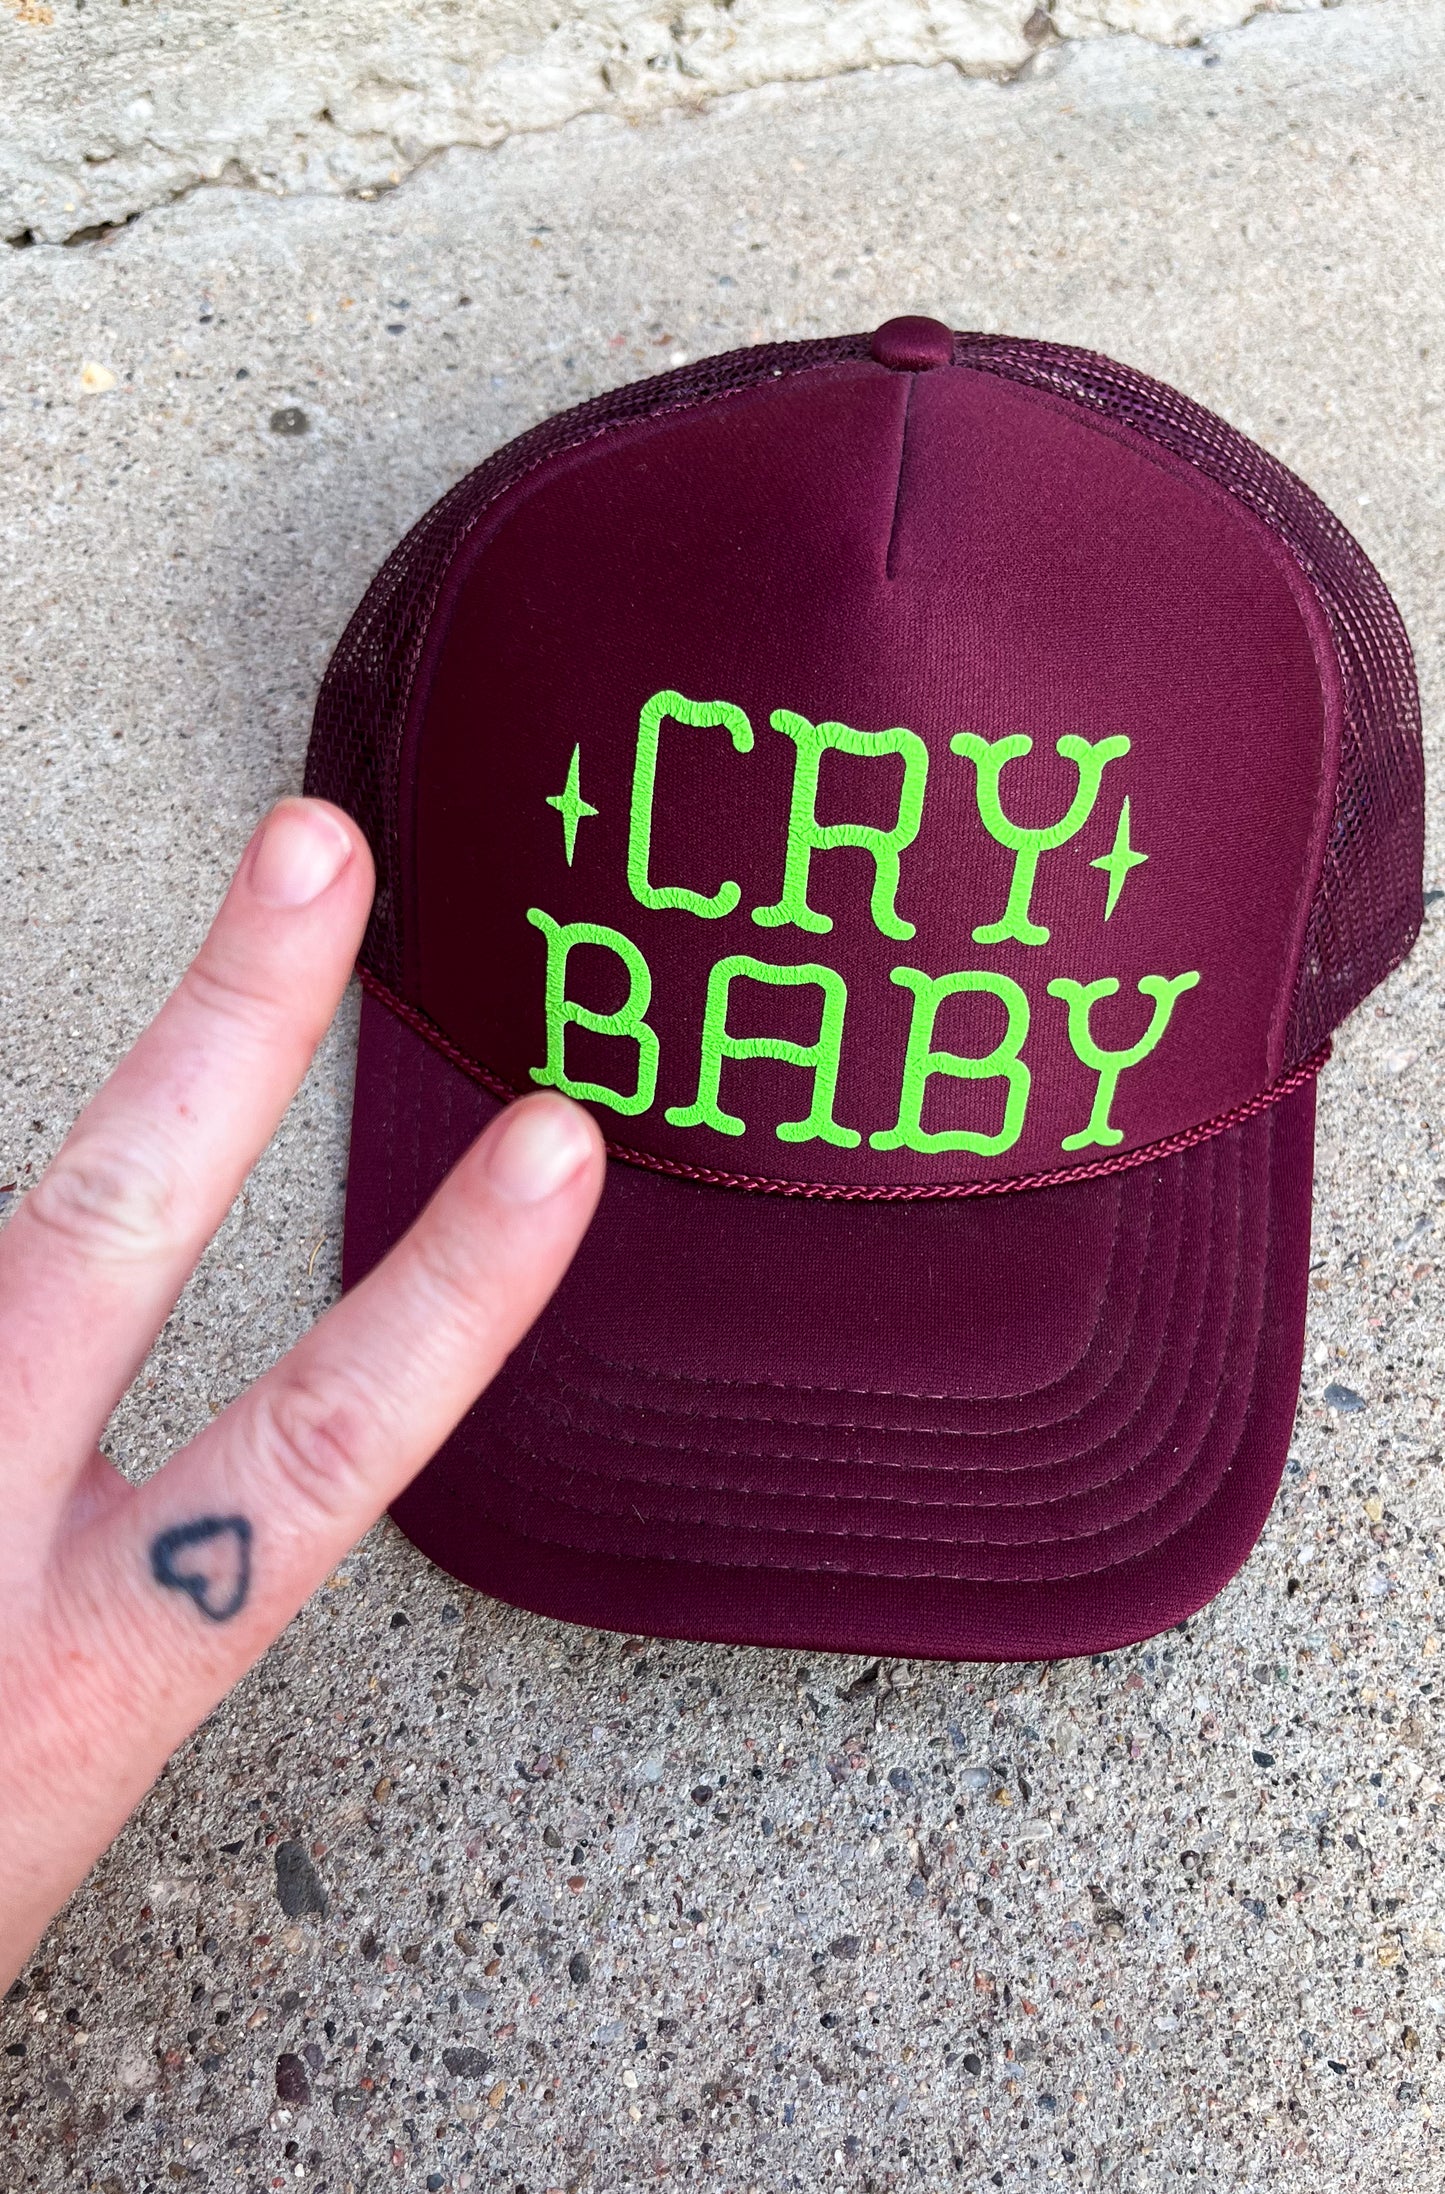 Cry Baby Cardinal Trucker